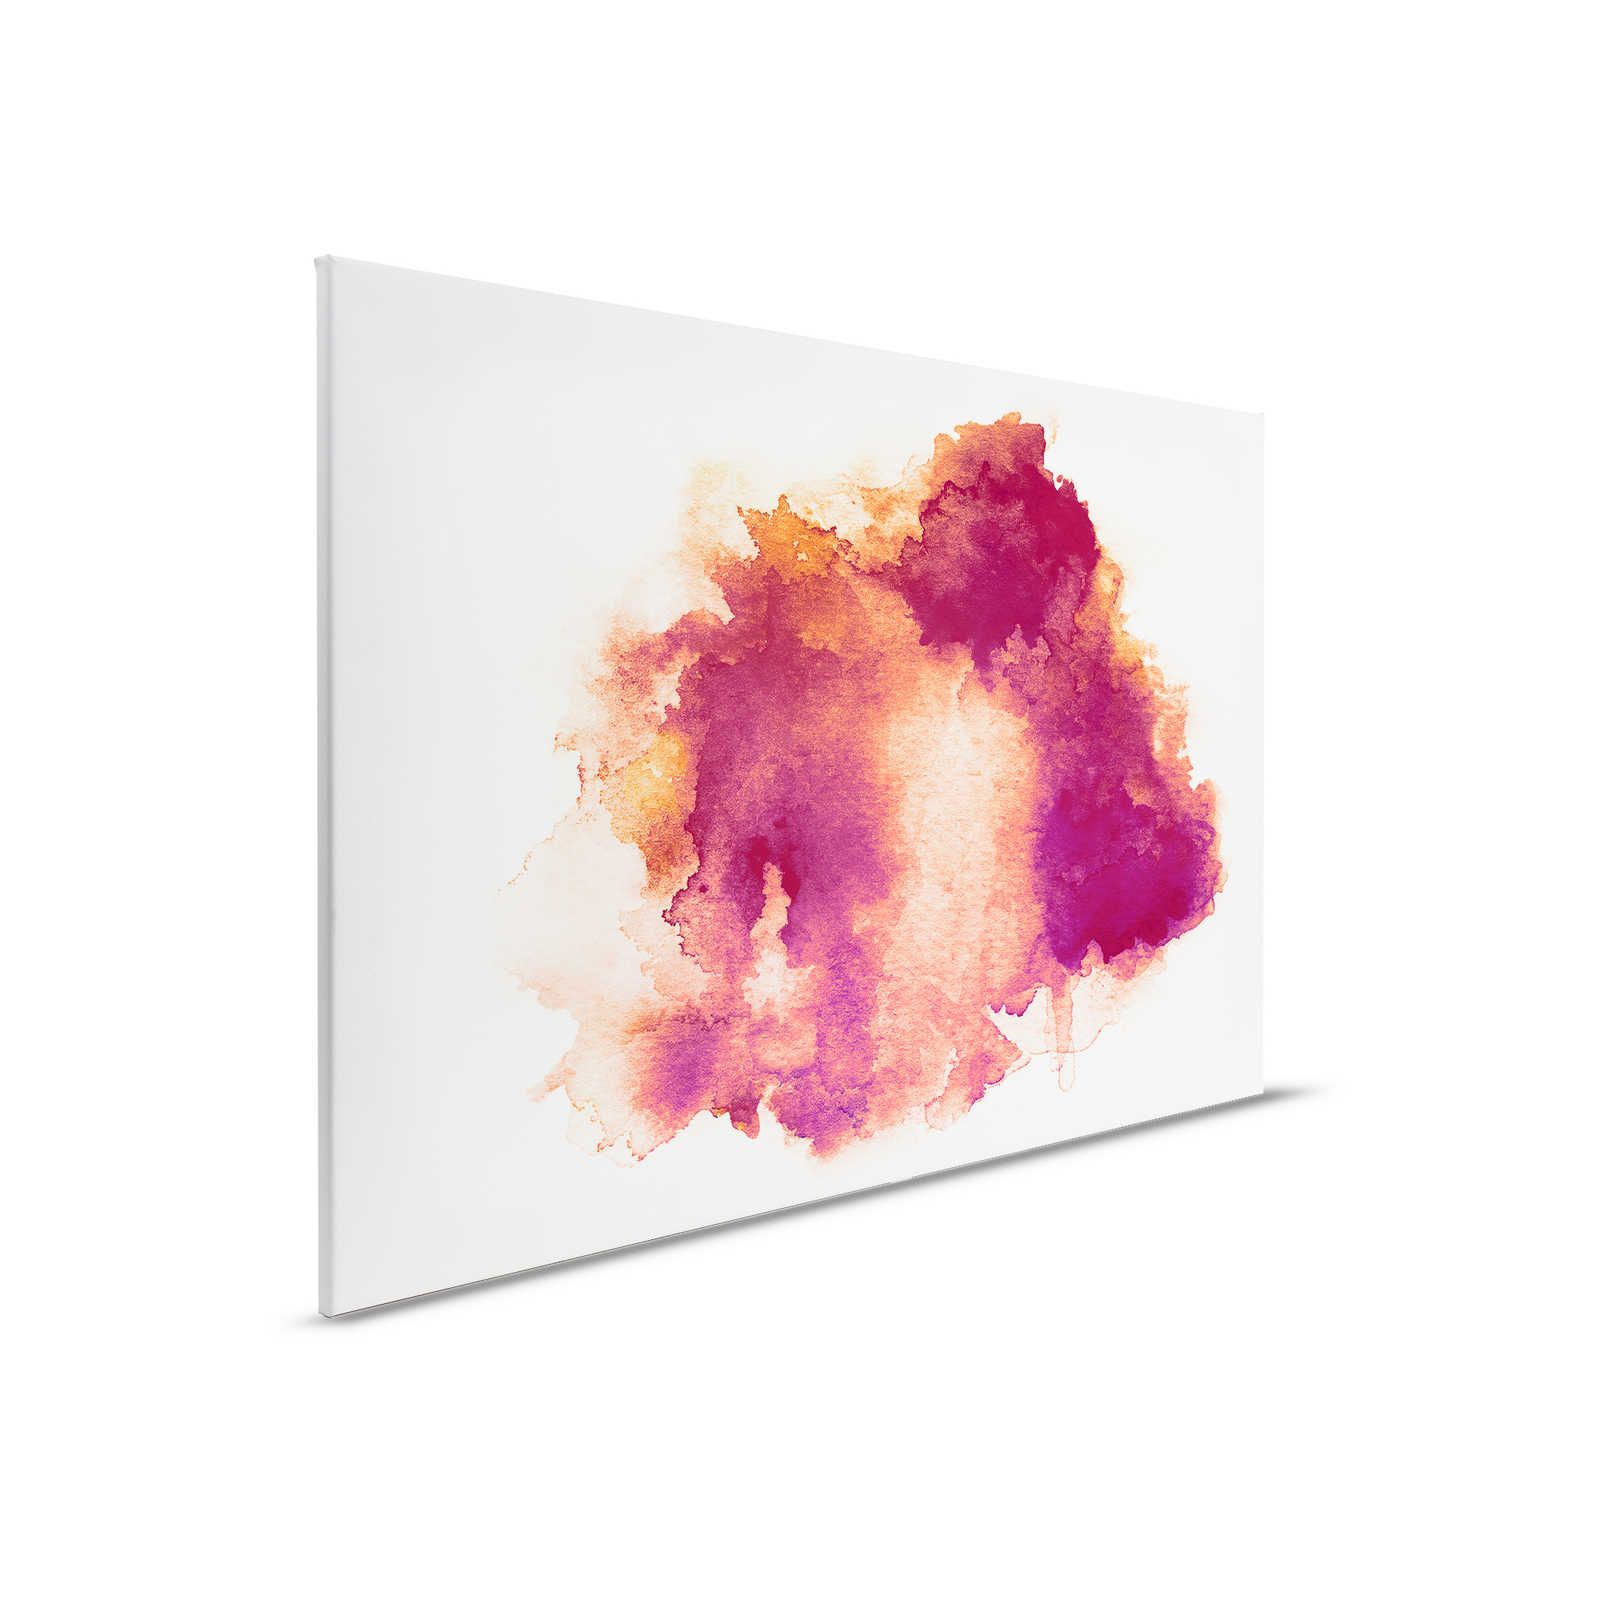         Leinwandbild Aquarell Fleck Rot mit Farbverlauf – 0,90 m x 0,60 m
    